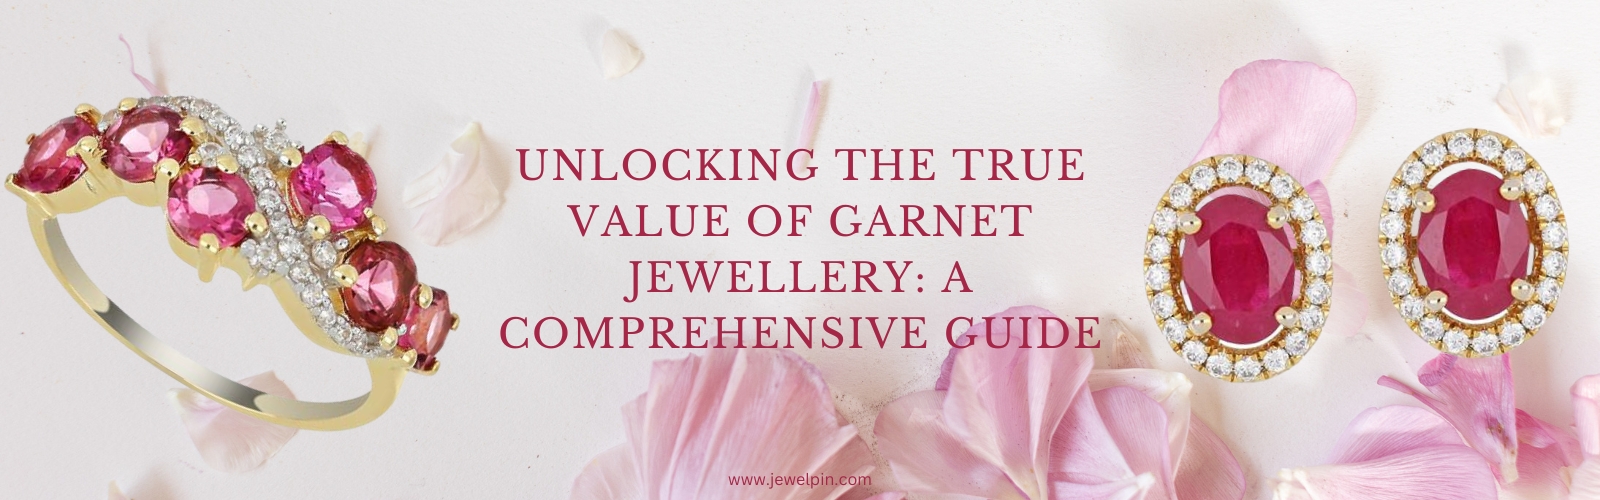 unlocking the true value of garnet jewellery a comprehensive guide